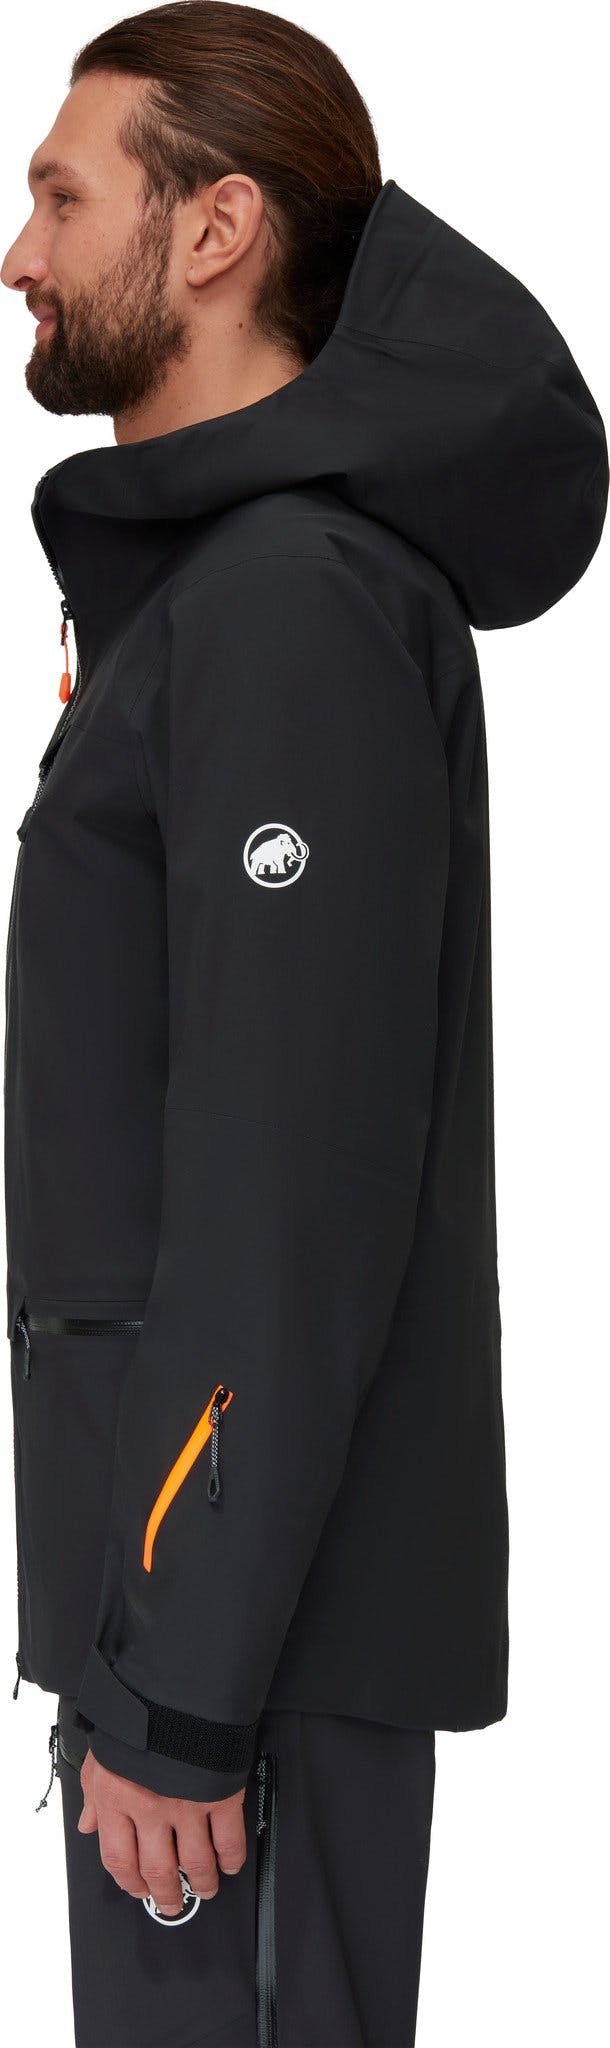 Product gallery image number 4 for product Haldigrat Hardshell Hooded Jacket - Men's